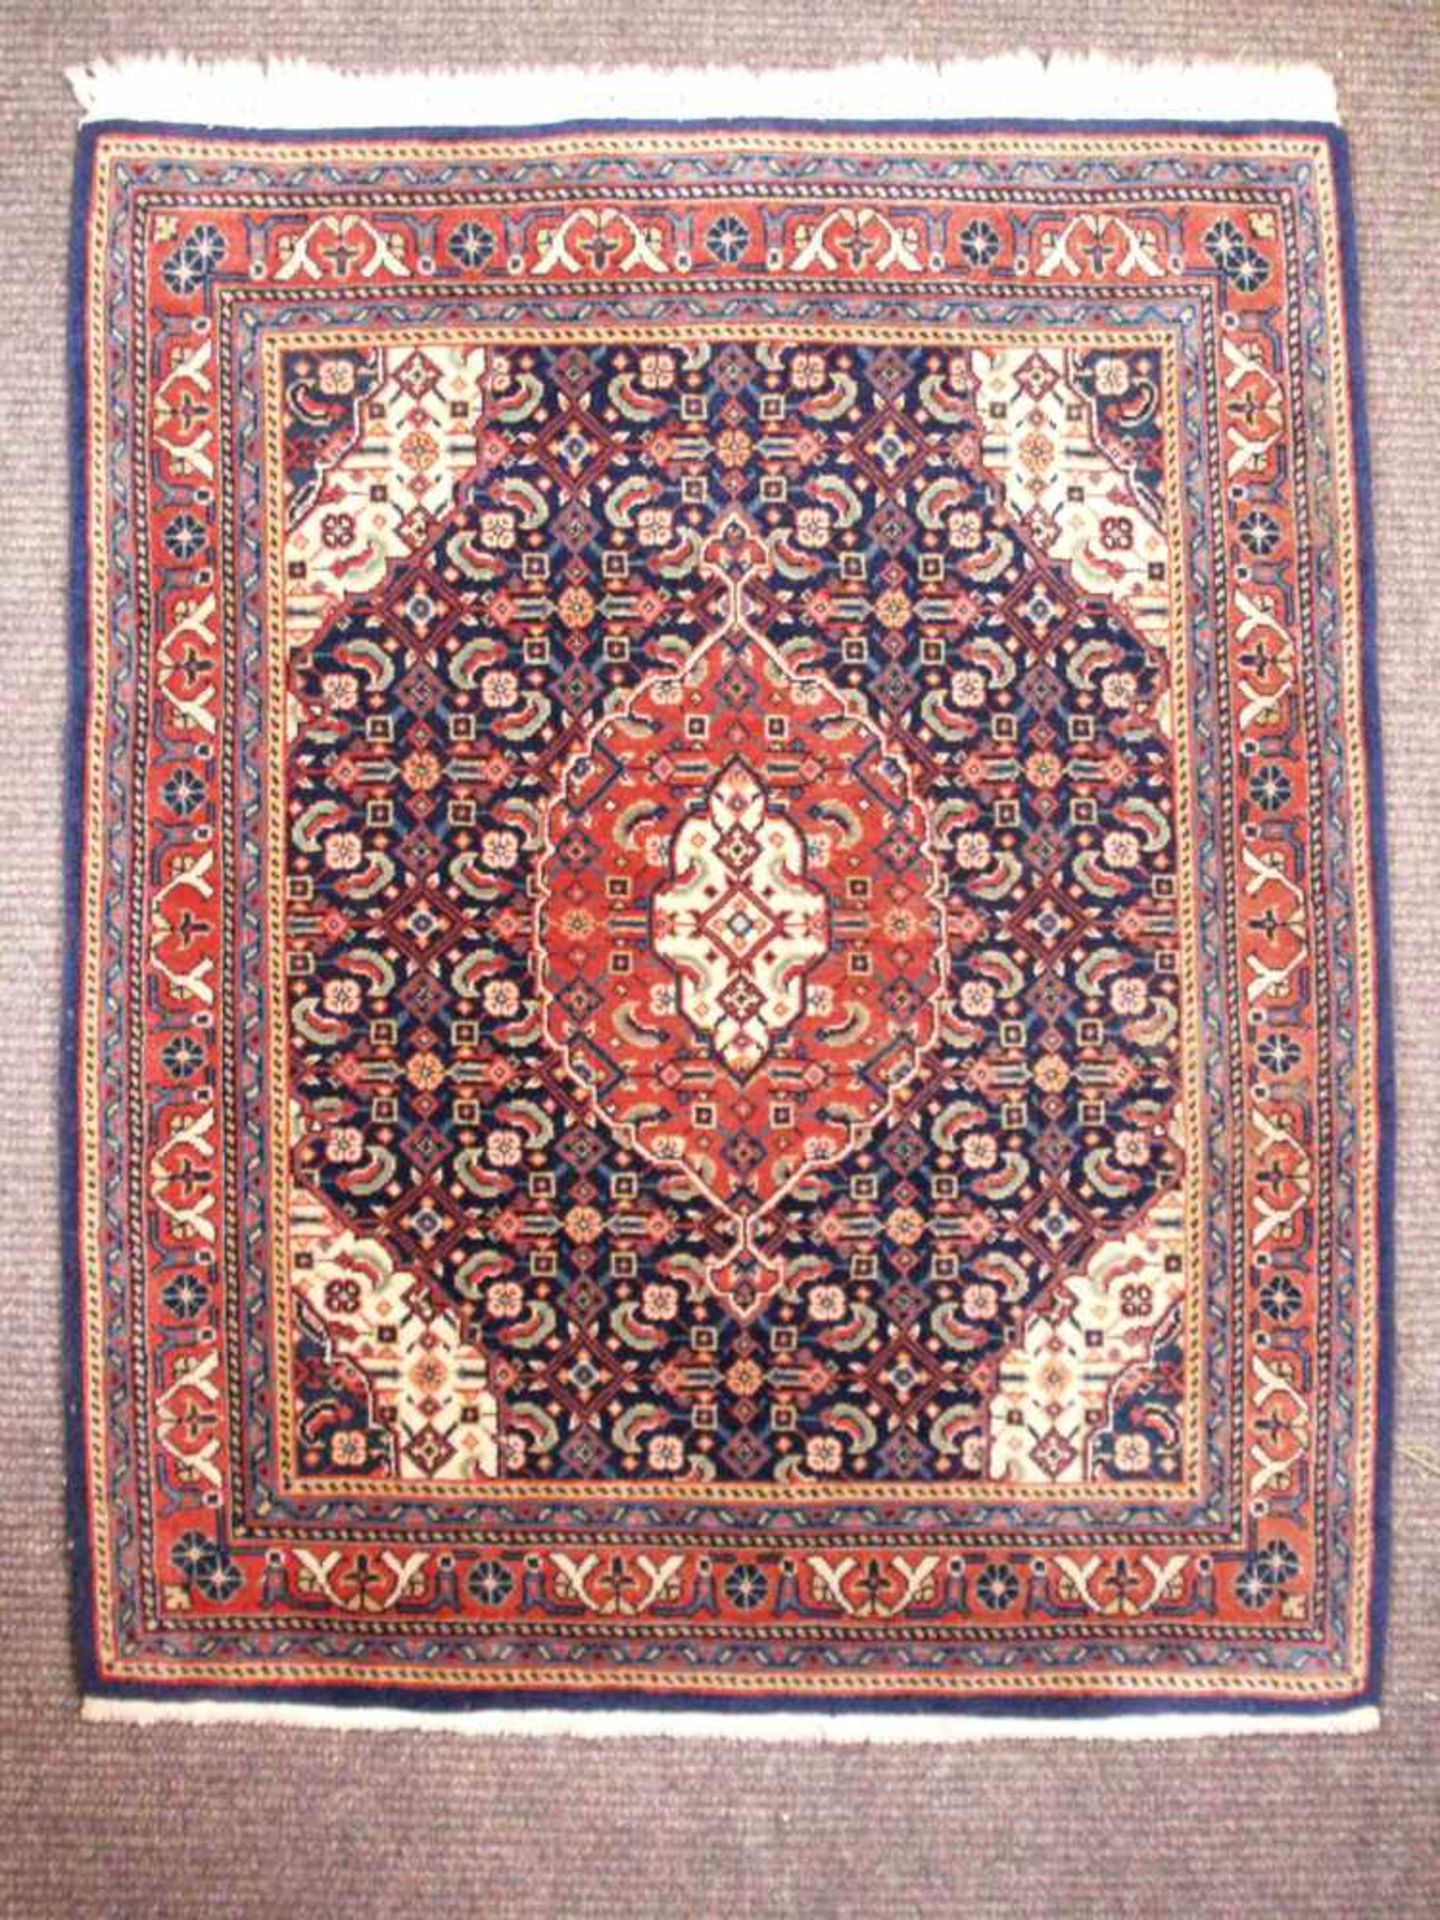 Orientteppich - Wolle, blaugrundig, zentraler Medaillon, ornamentales Muster, mehrfache Bordüre,